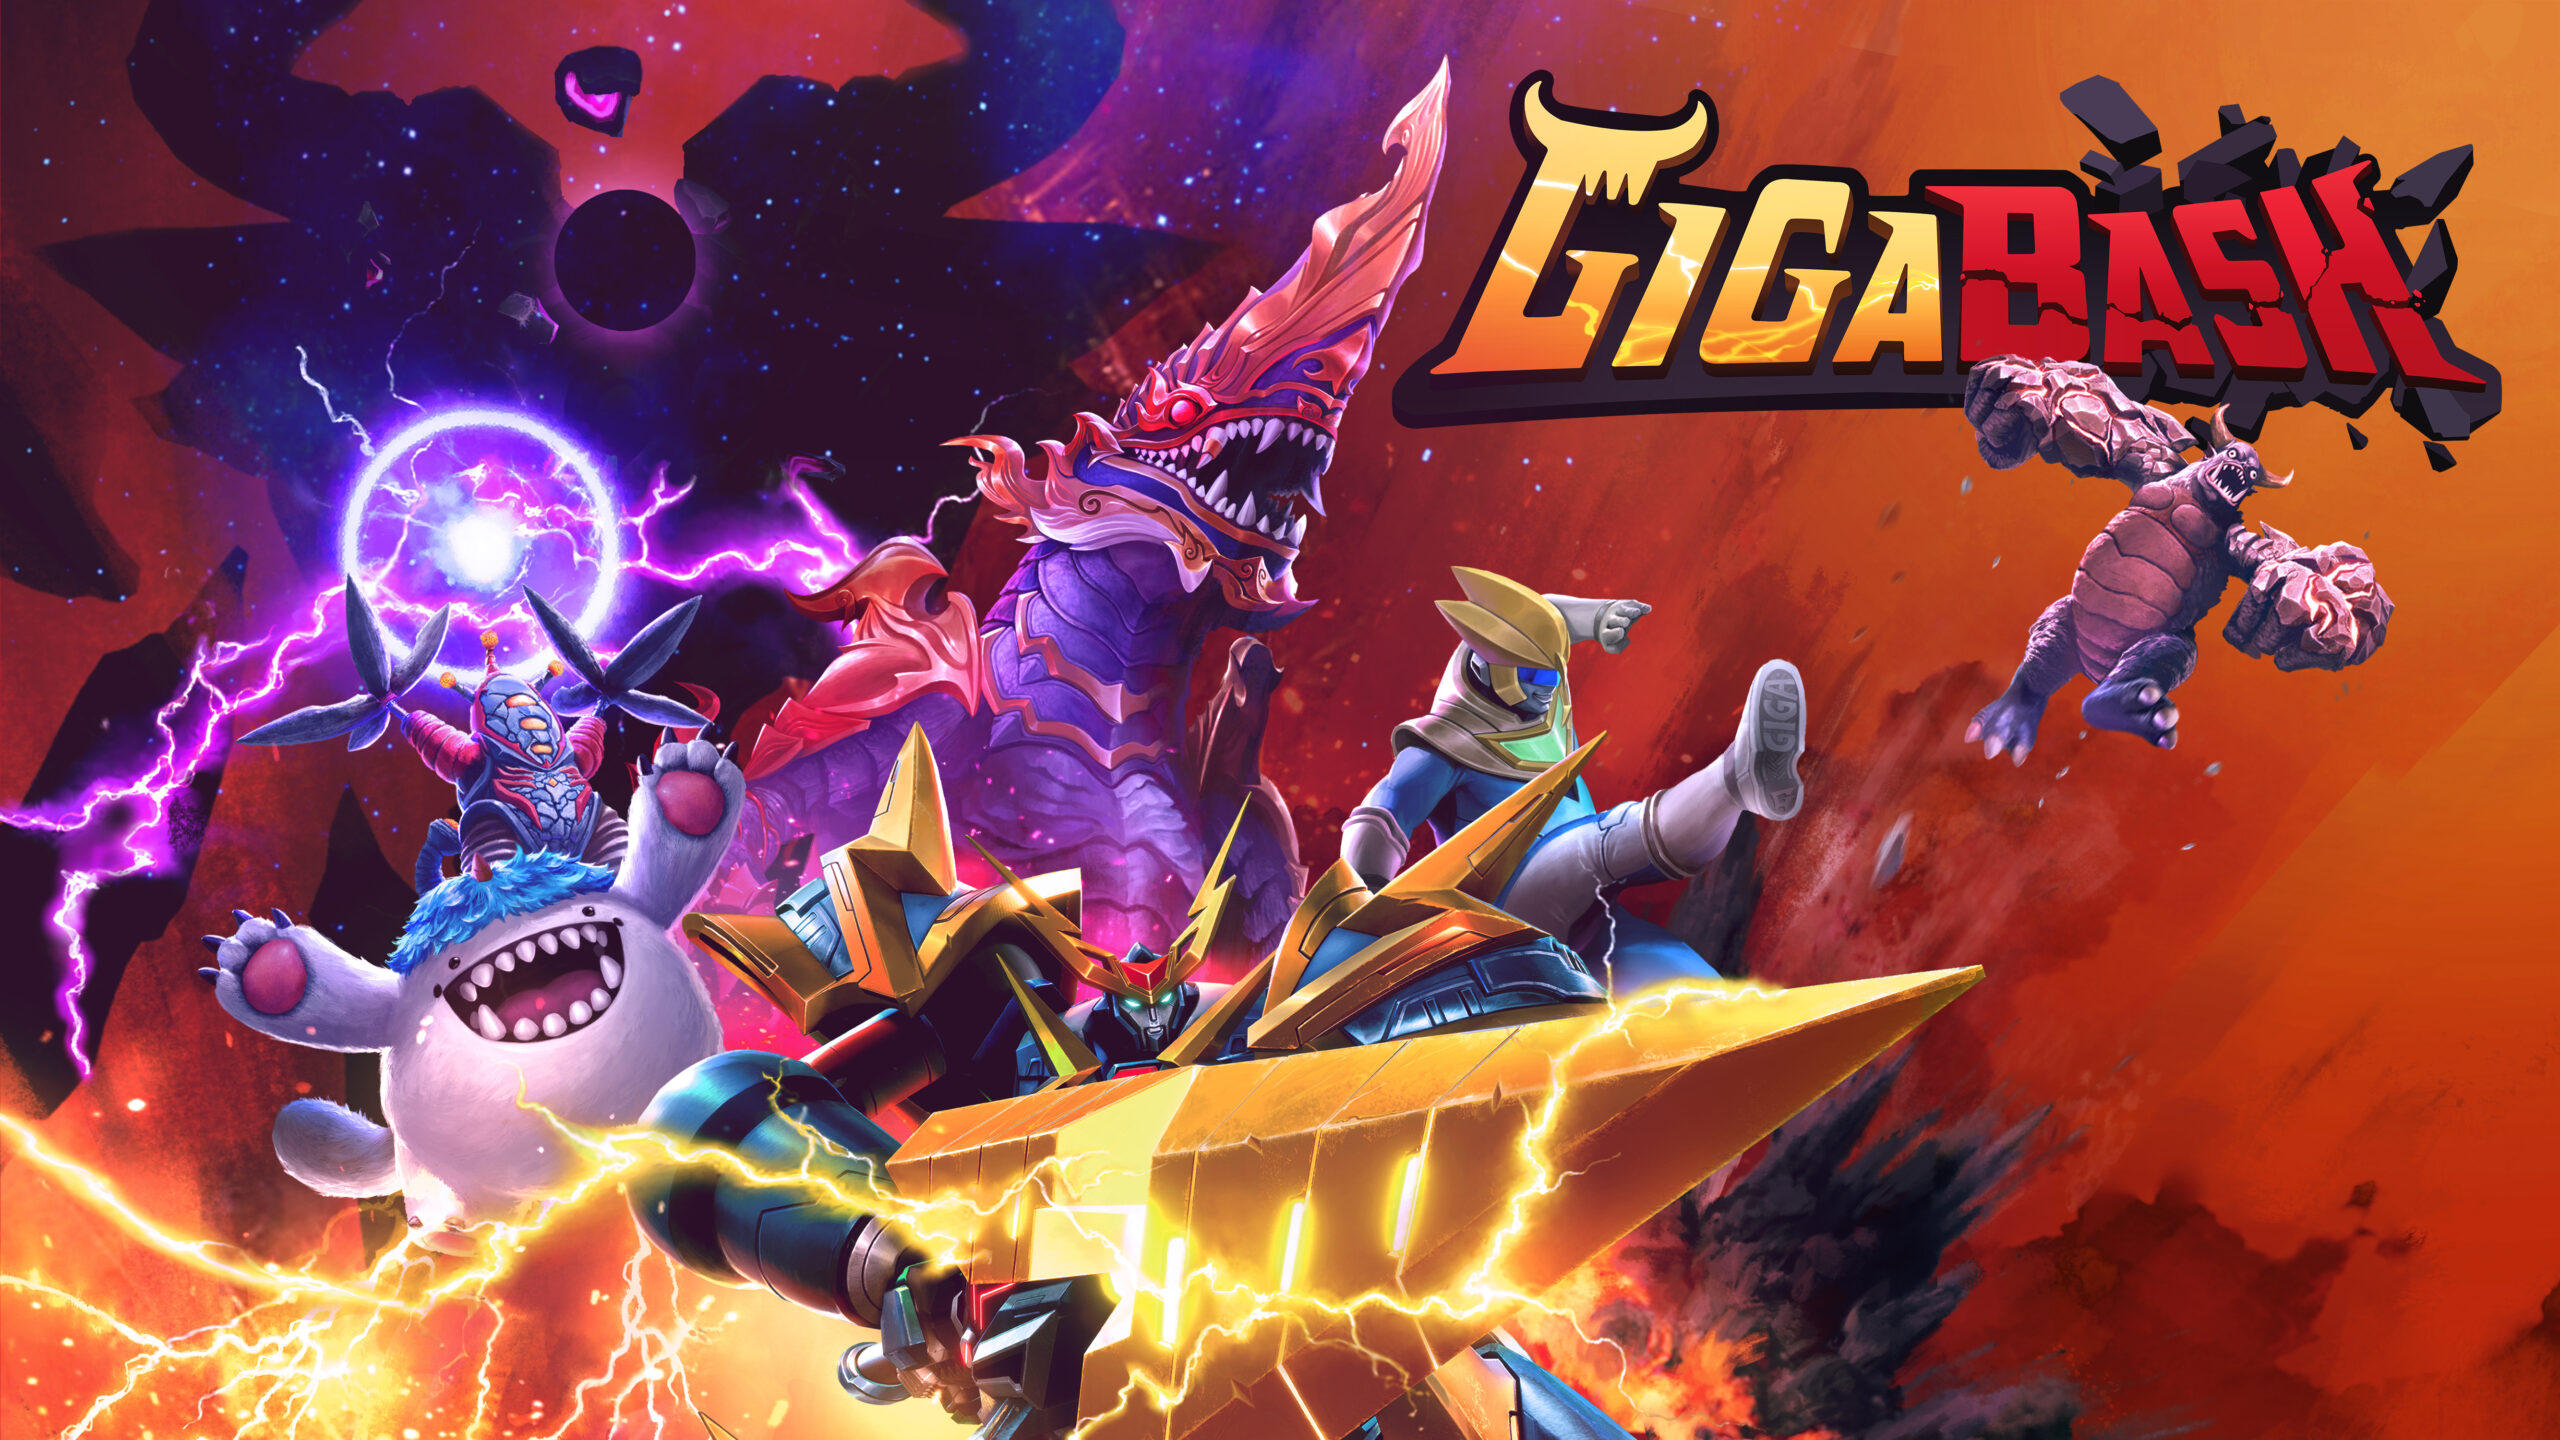 GigaBash - Godzilla 4 Kaiju Pack on Steam